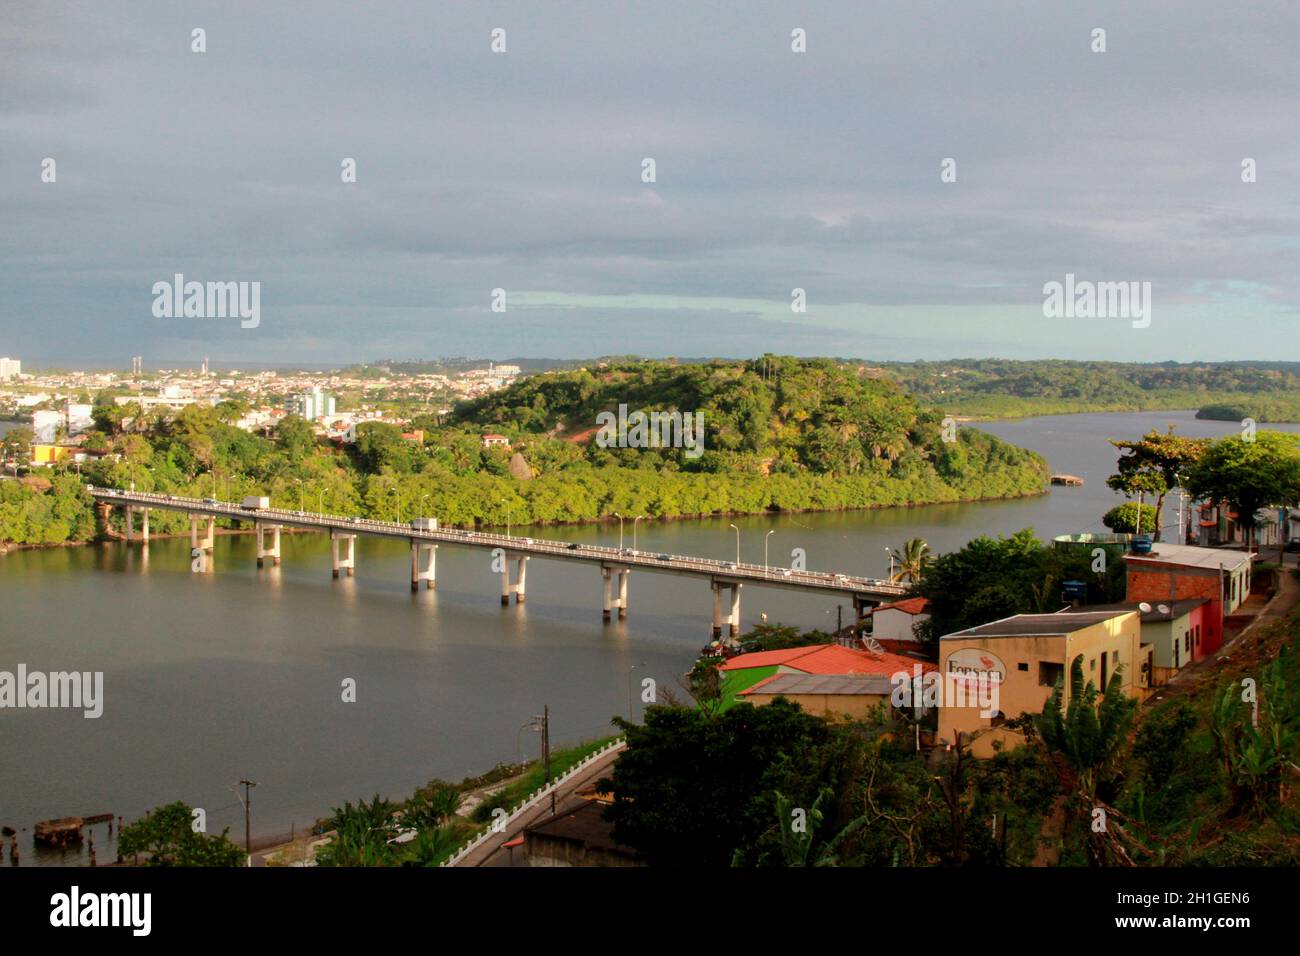 ilheus, bahia / brasil - 27 de junio de 2012: Vista aérea del puente Lomanto Junior y Baia do Pontal en la ciudad de Ilheus. Foto de stock